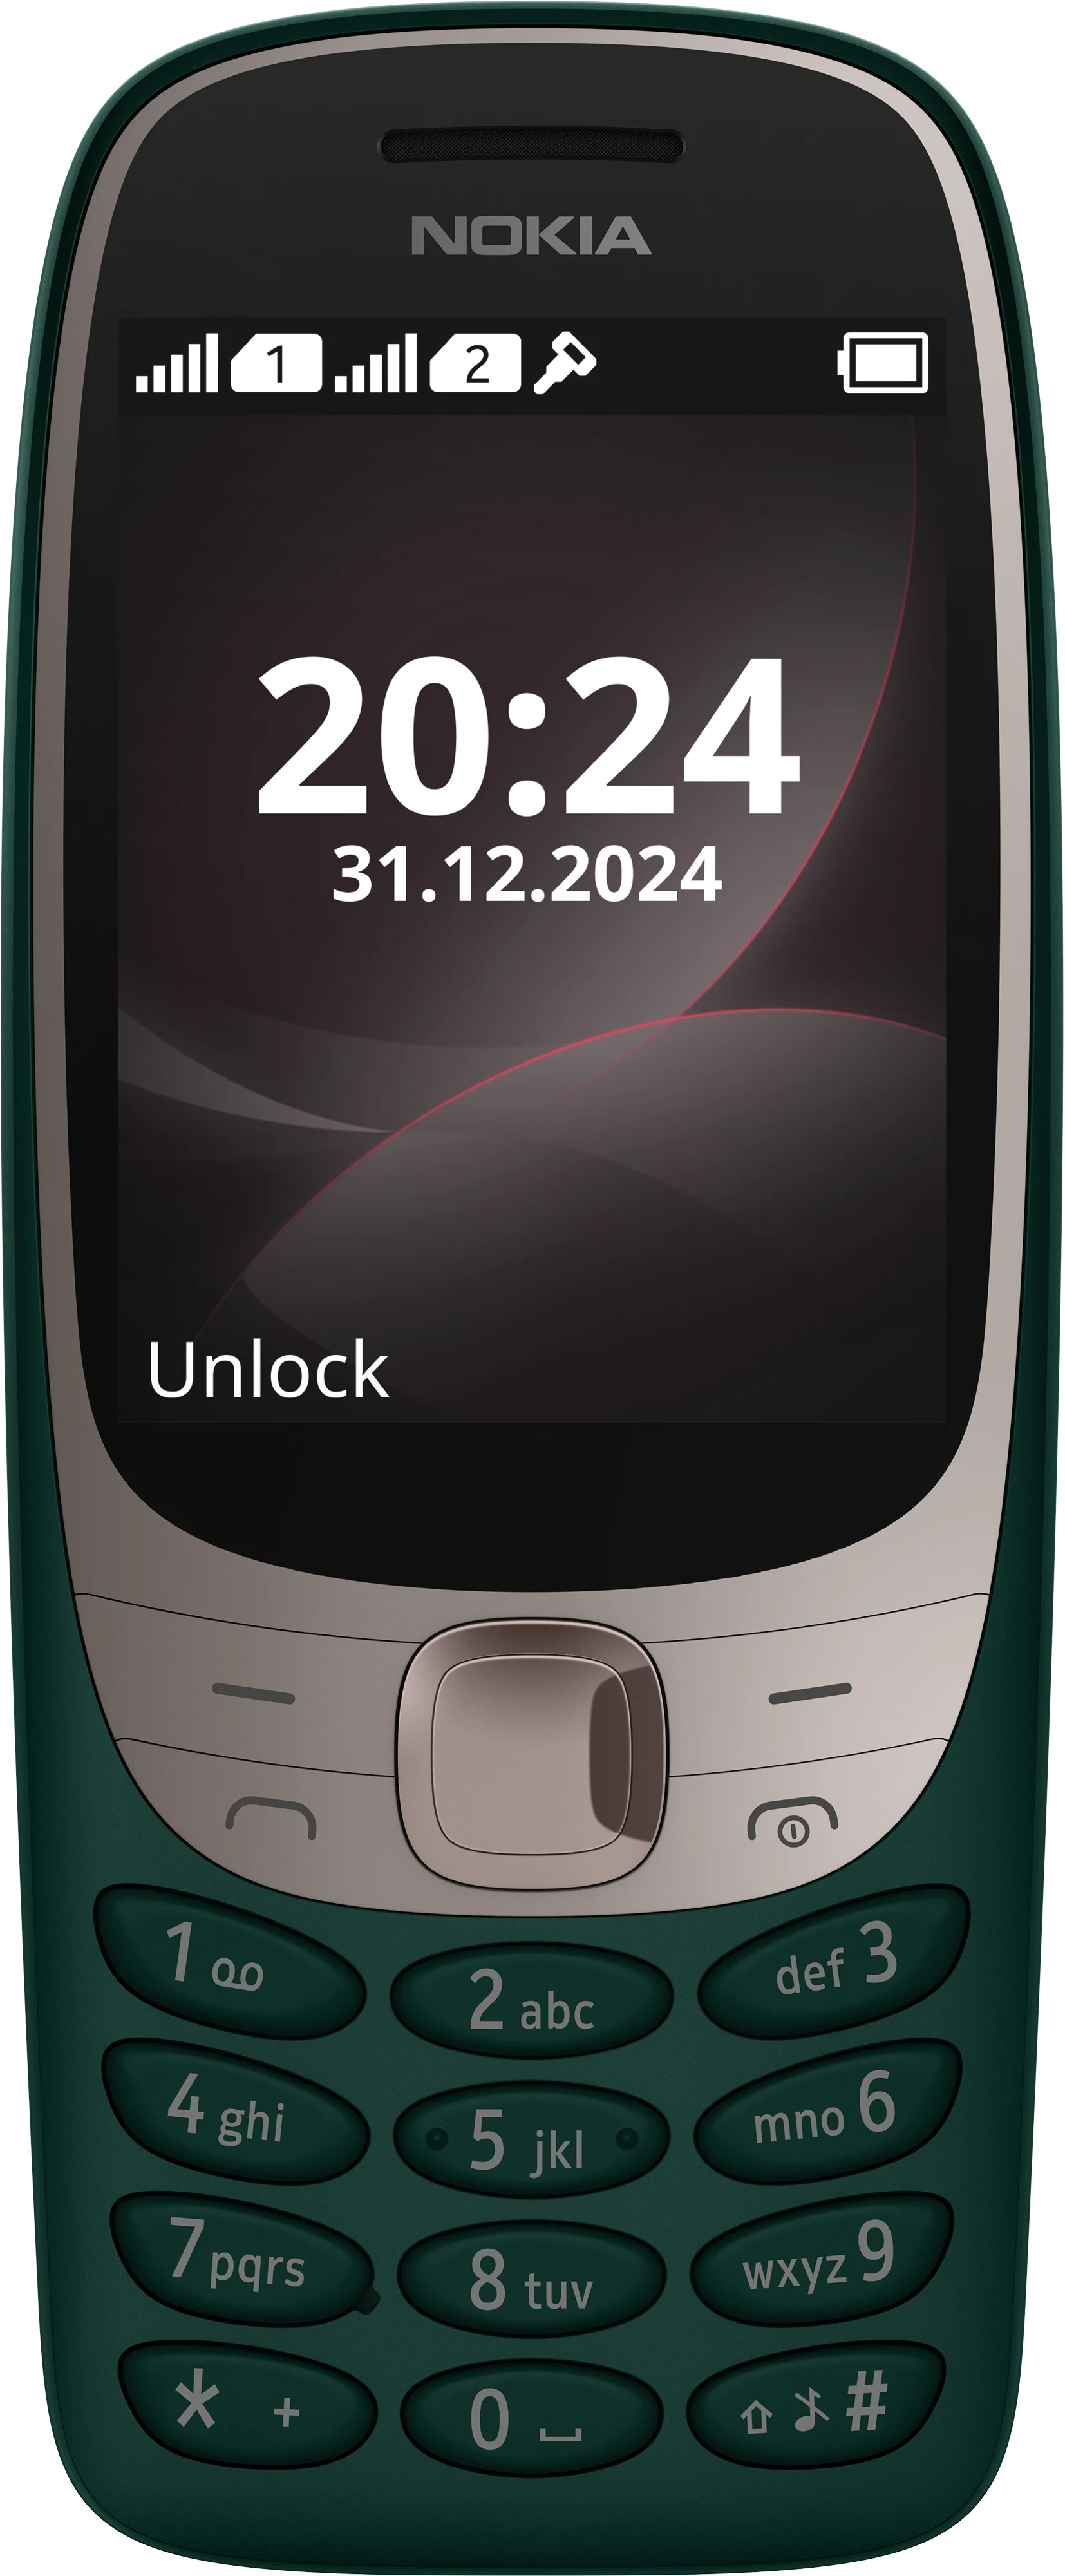 Nokia 6310 (2024) feature phone